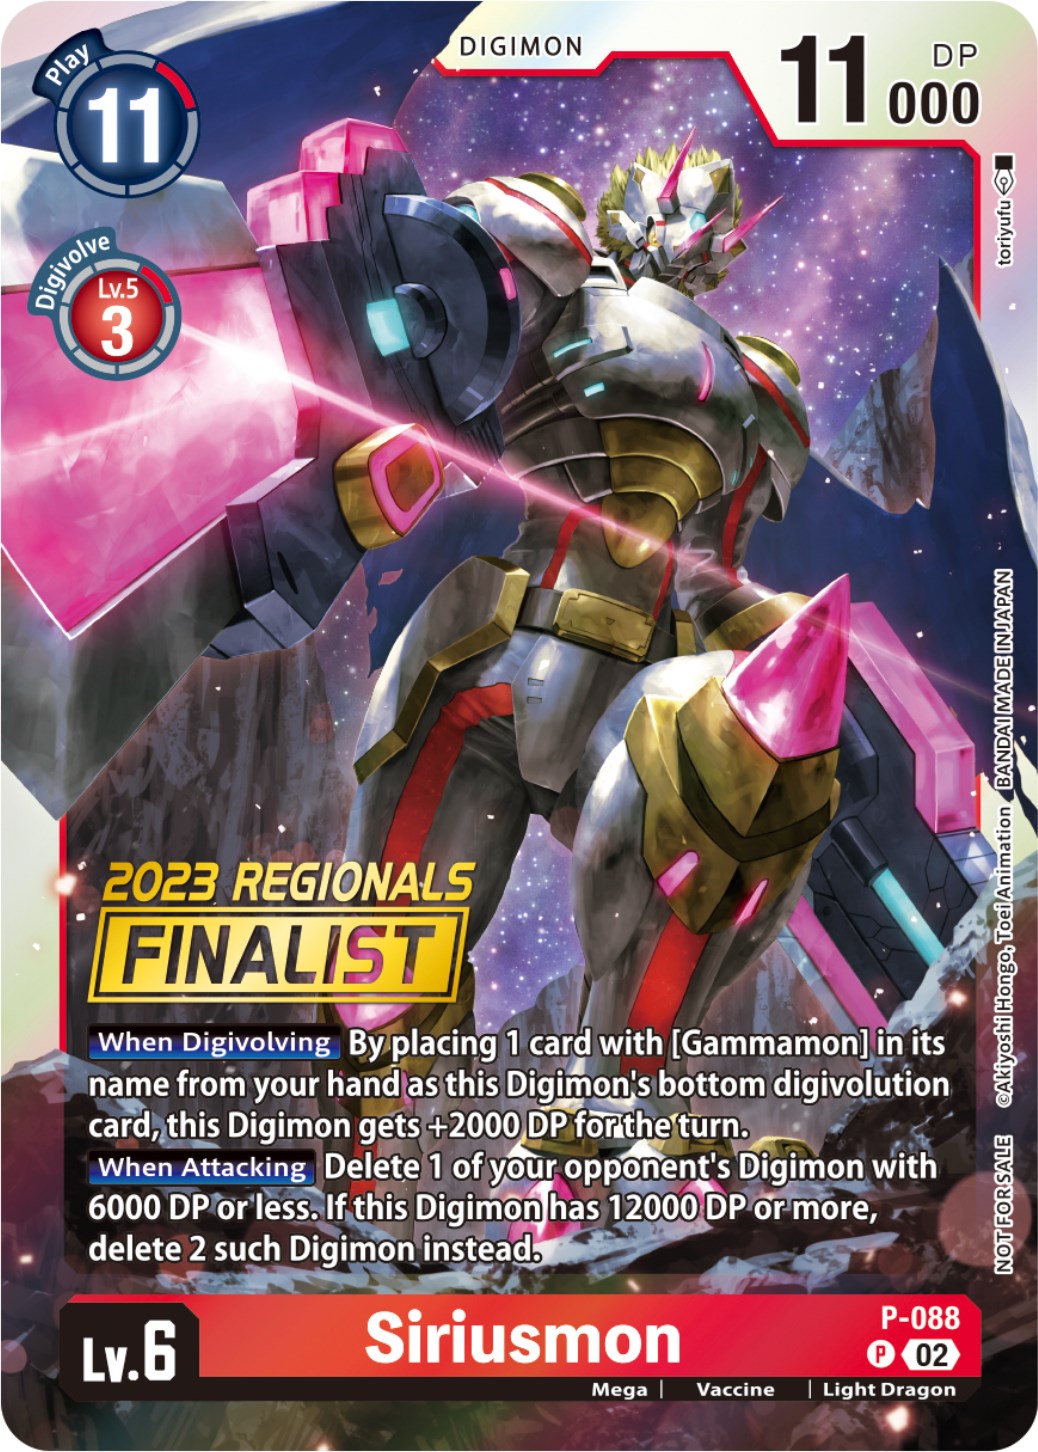 Siriusmon [P-088] (2023 Regionals Finalist) [Promotional Cards] | Total Play